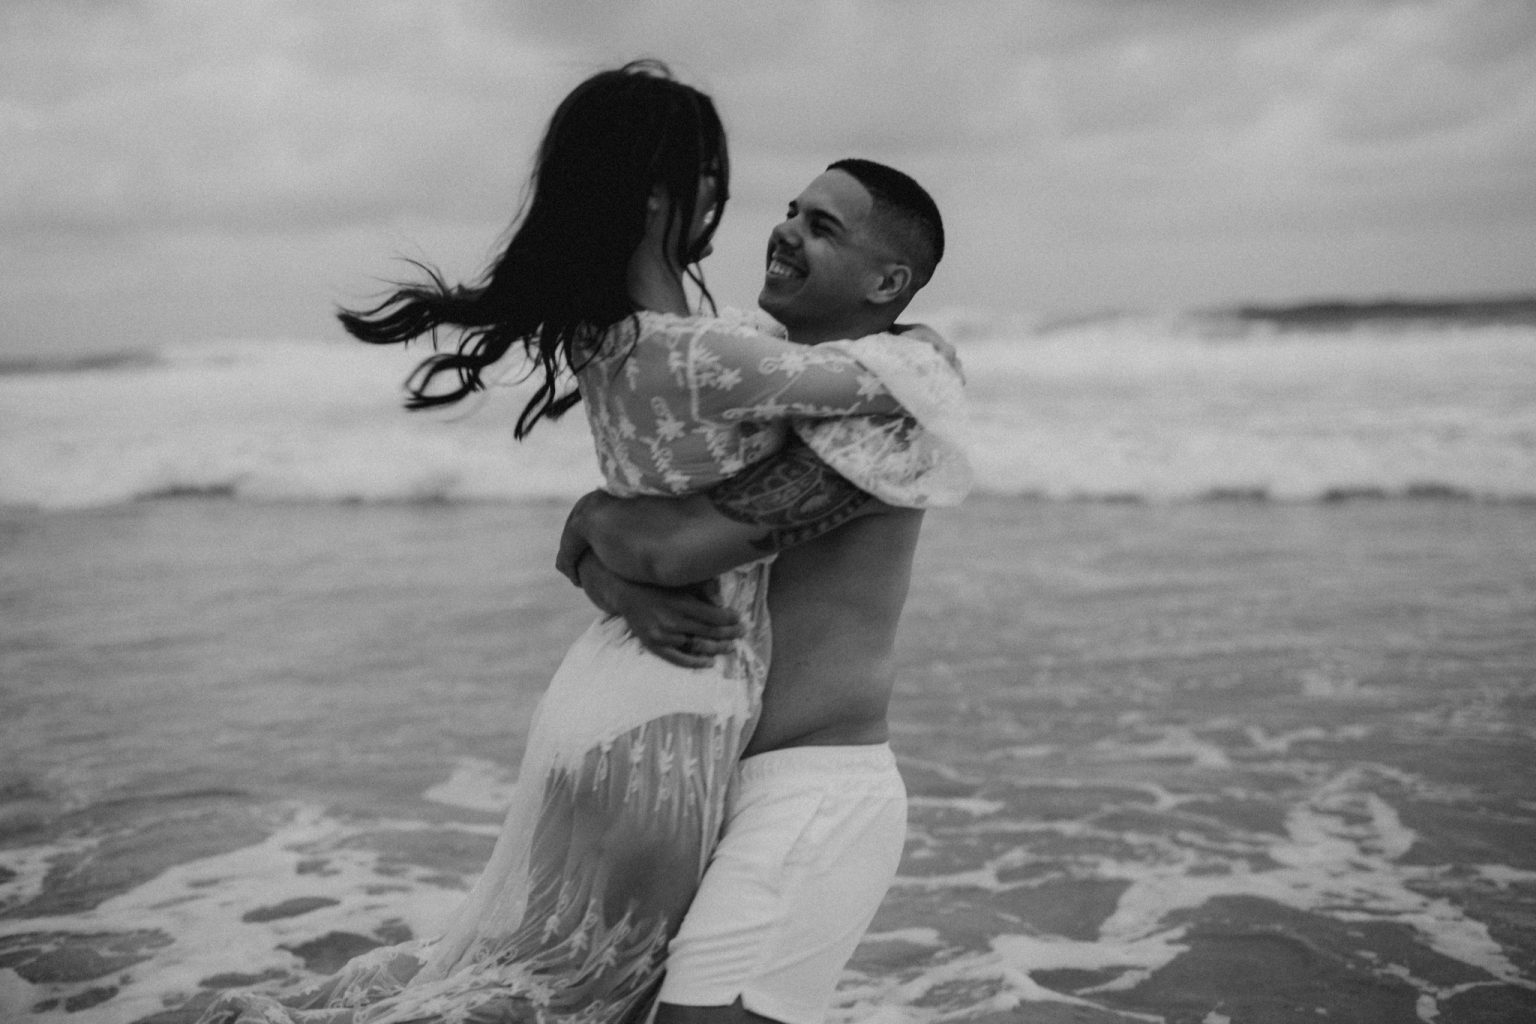 tattooed man and woman wearing lace on beach